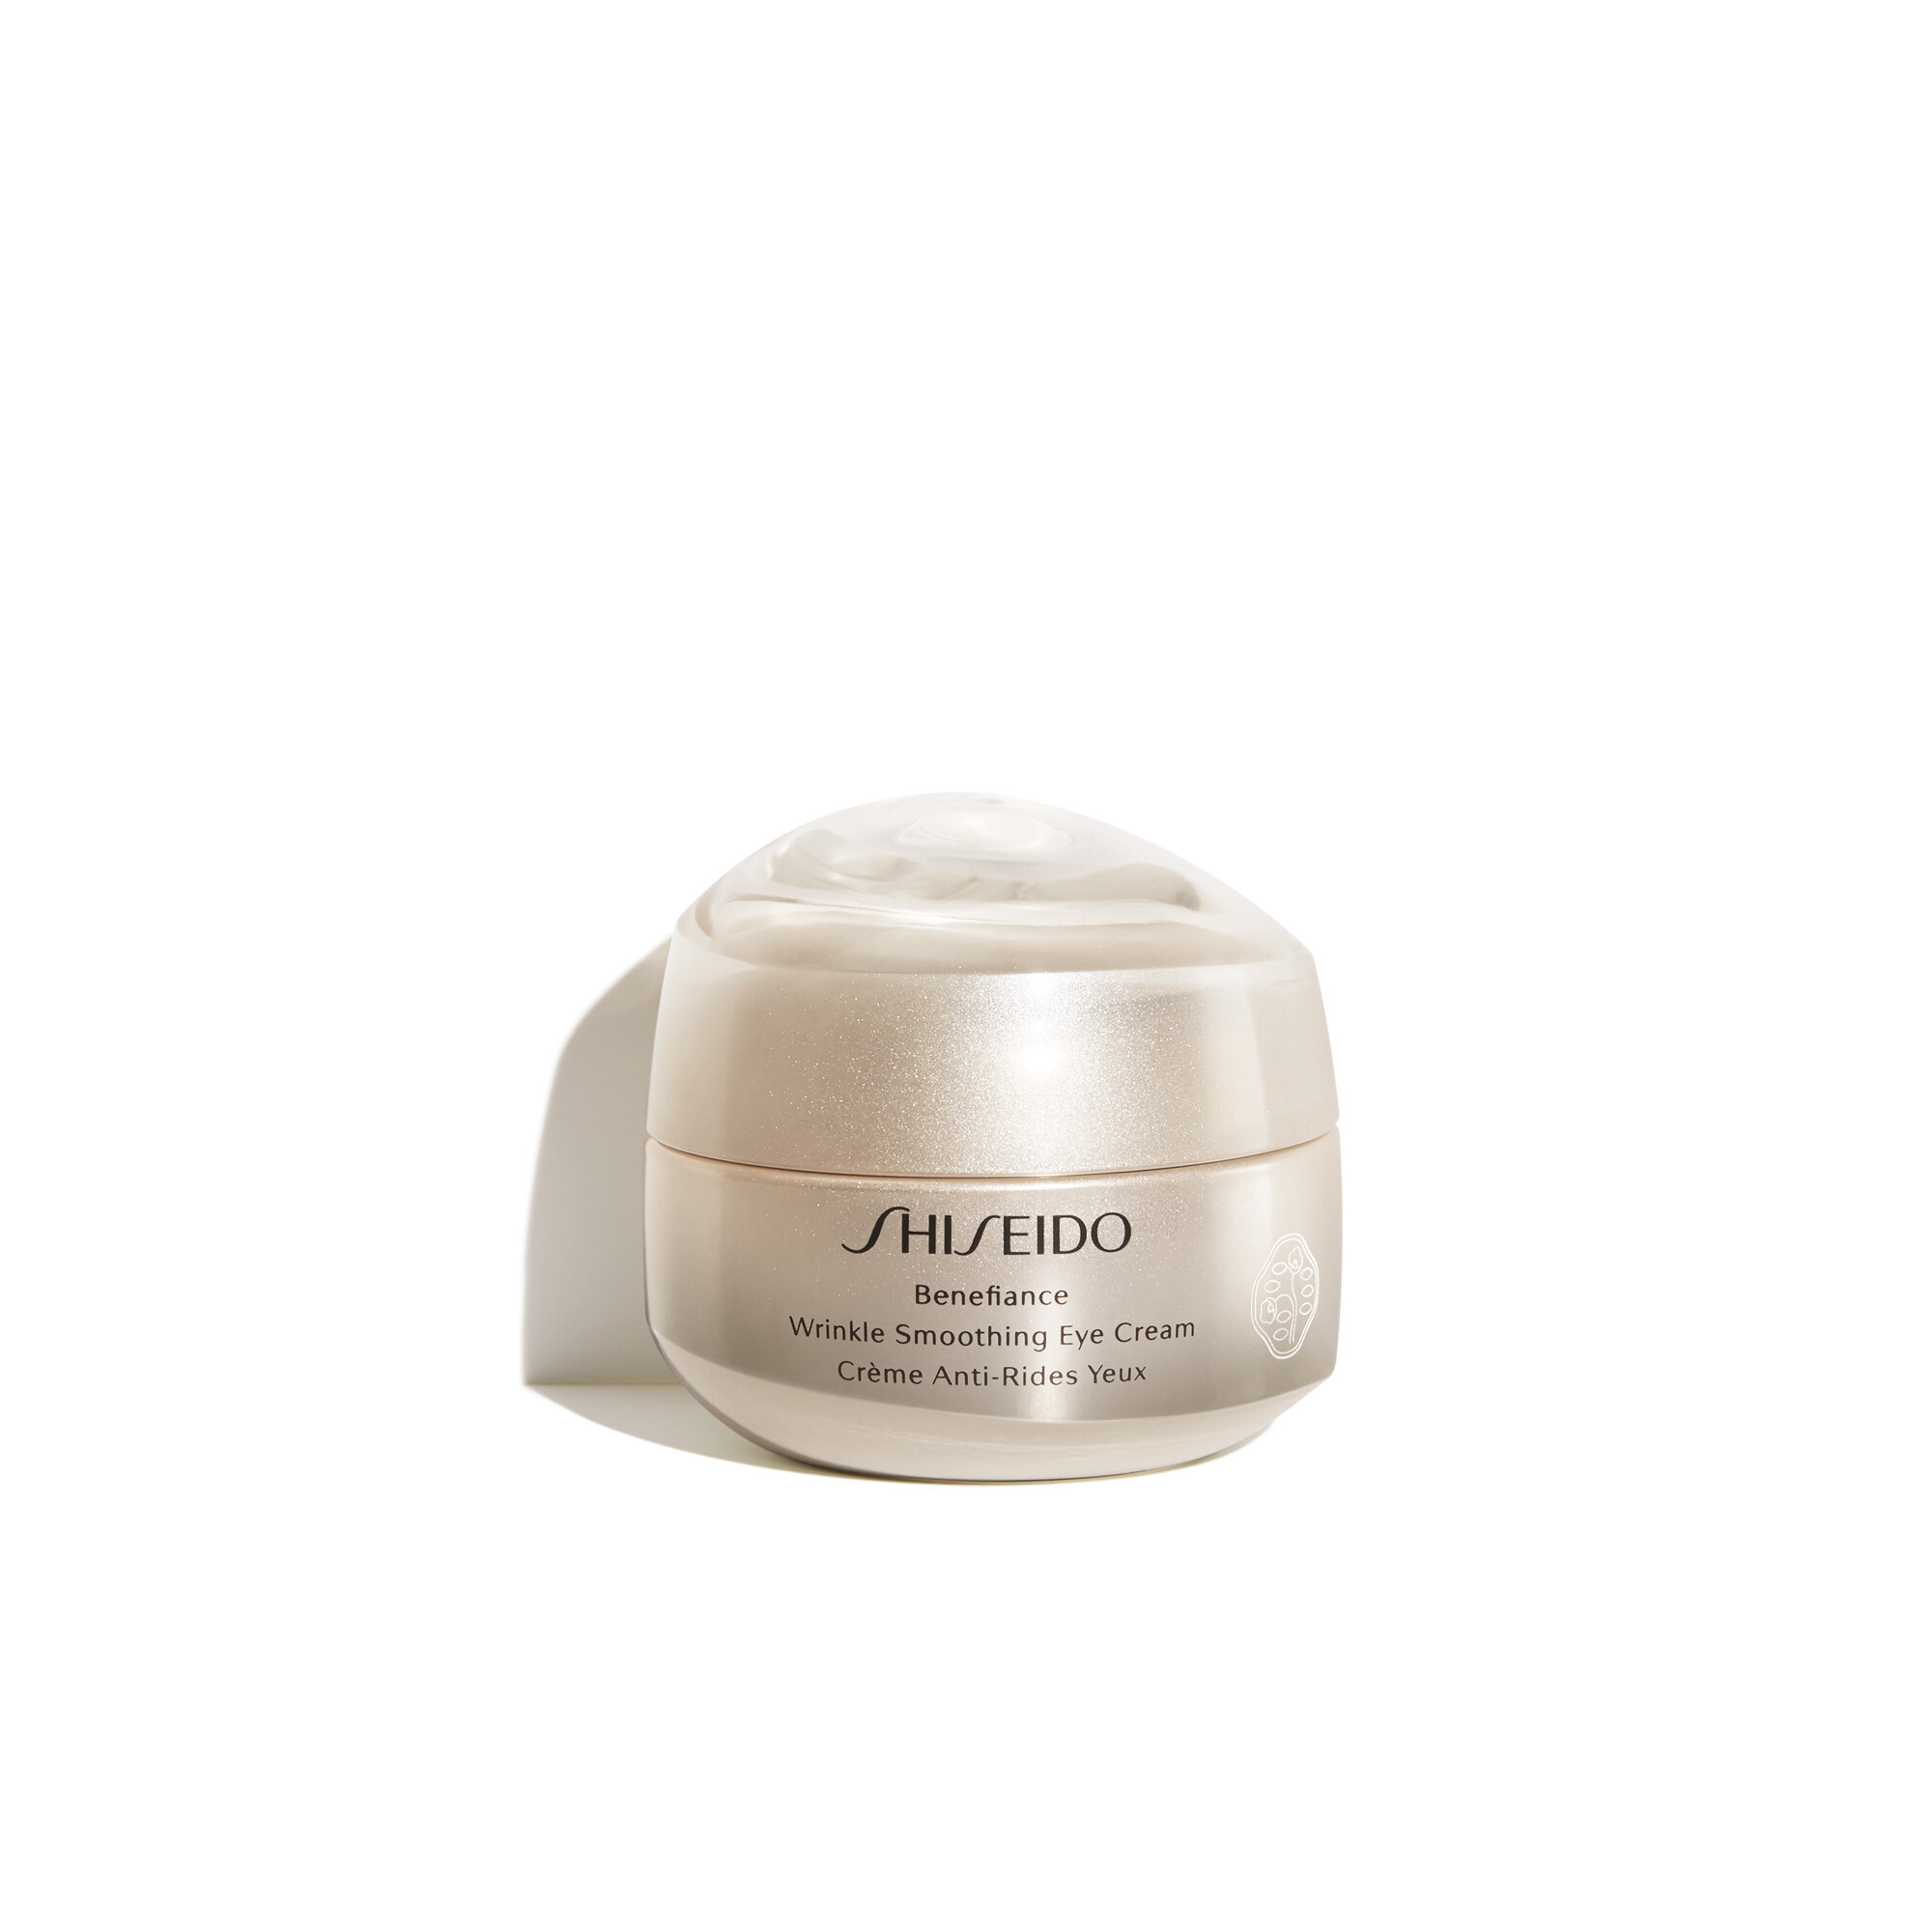 Gesichtspflege Shiseido Benefiance Wrinkle Smoothing Eye Cream 15ml kaufen